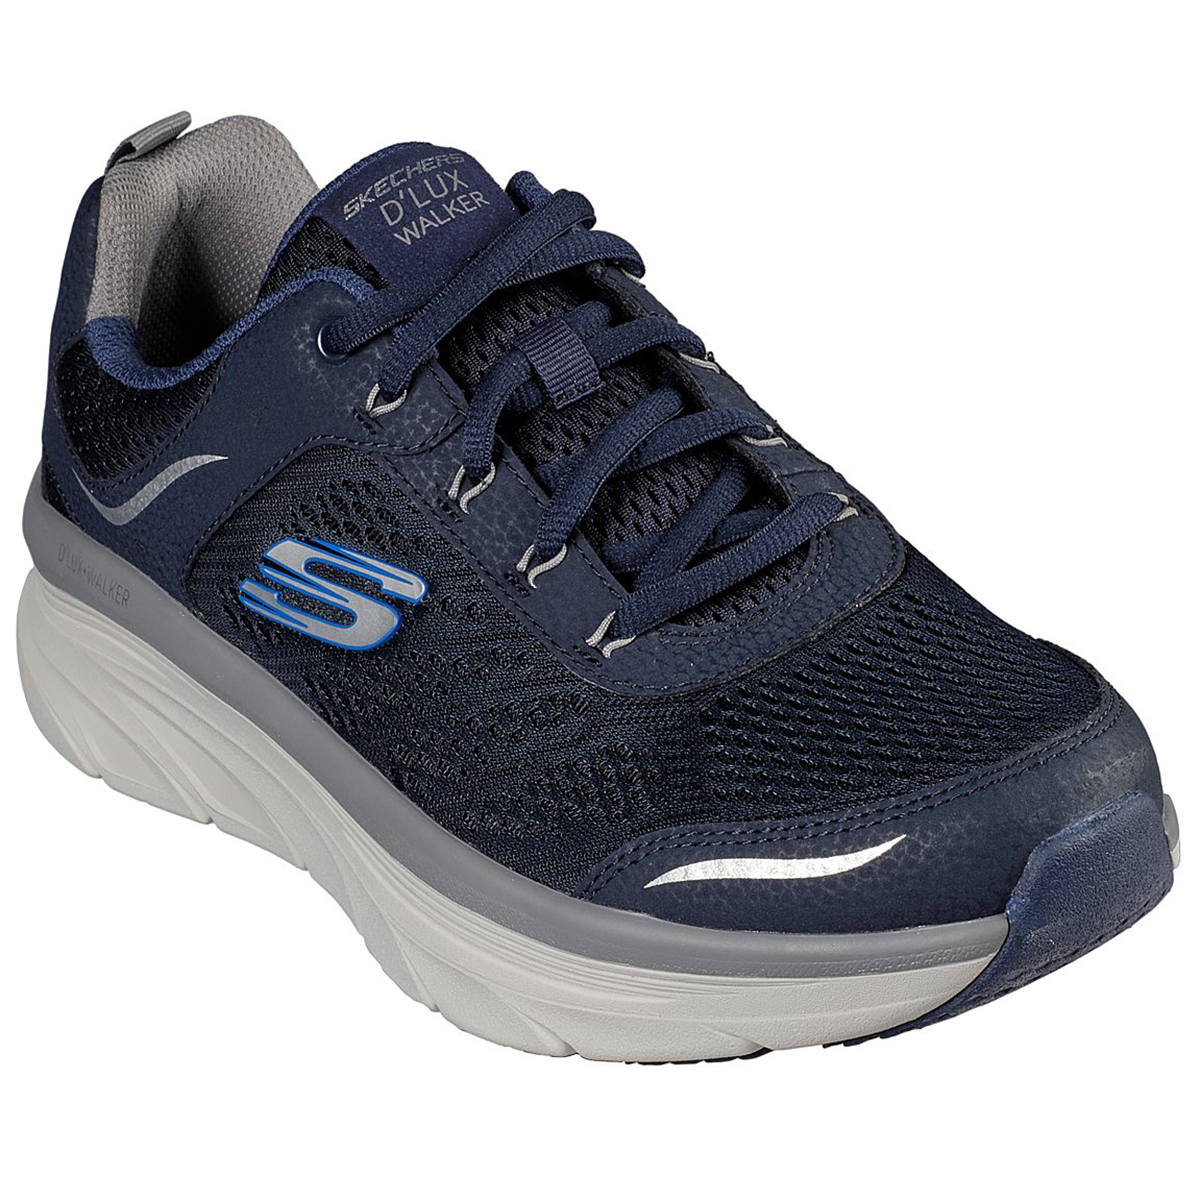 Skechers Men's Relaxed Fit D'lux Walking Shoes - Blue, 10